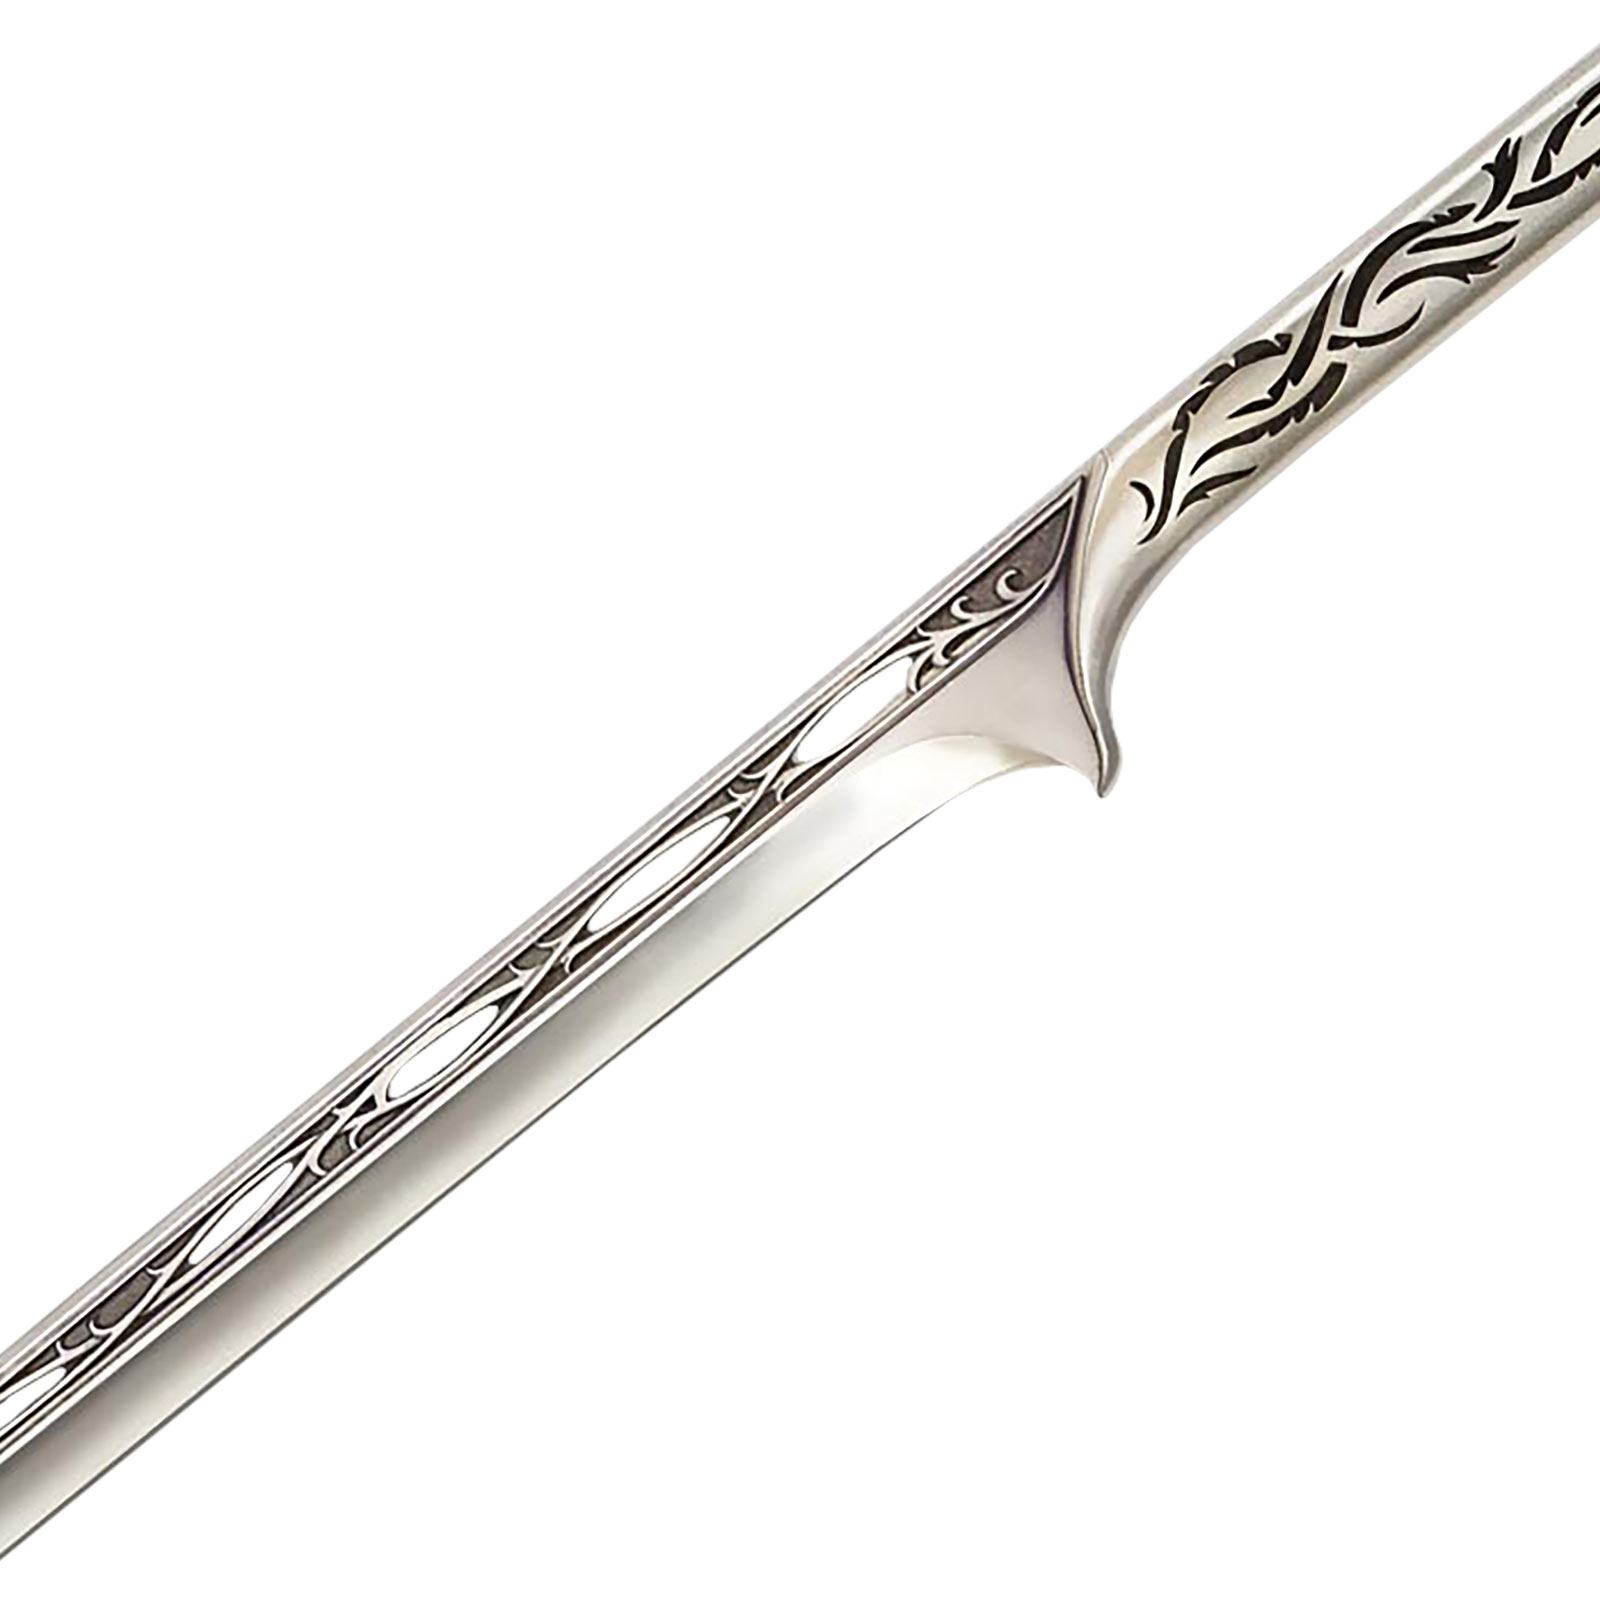 The Hobbit - Thranduil's Sword